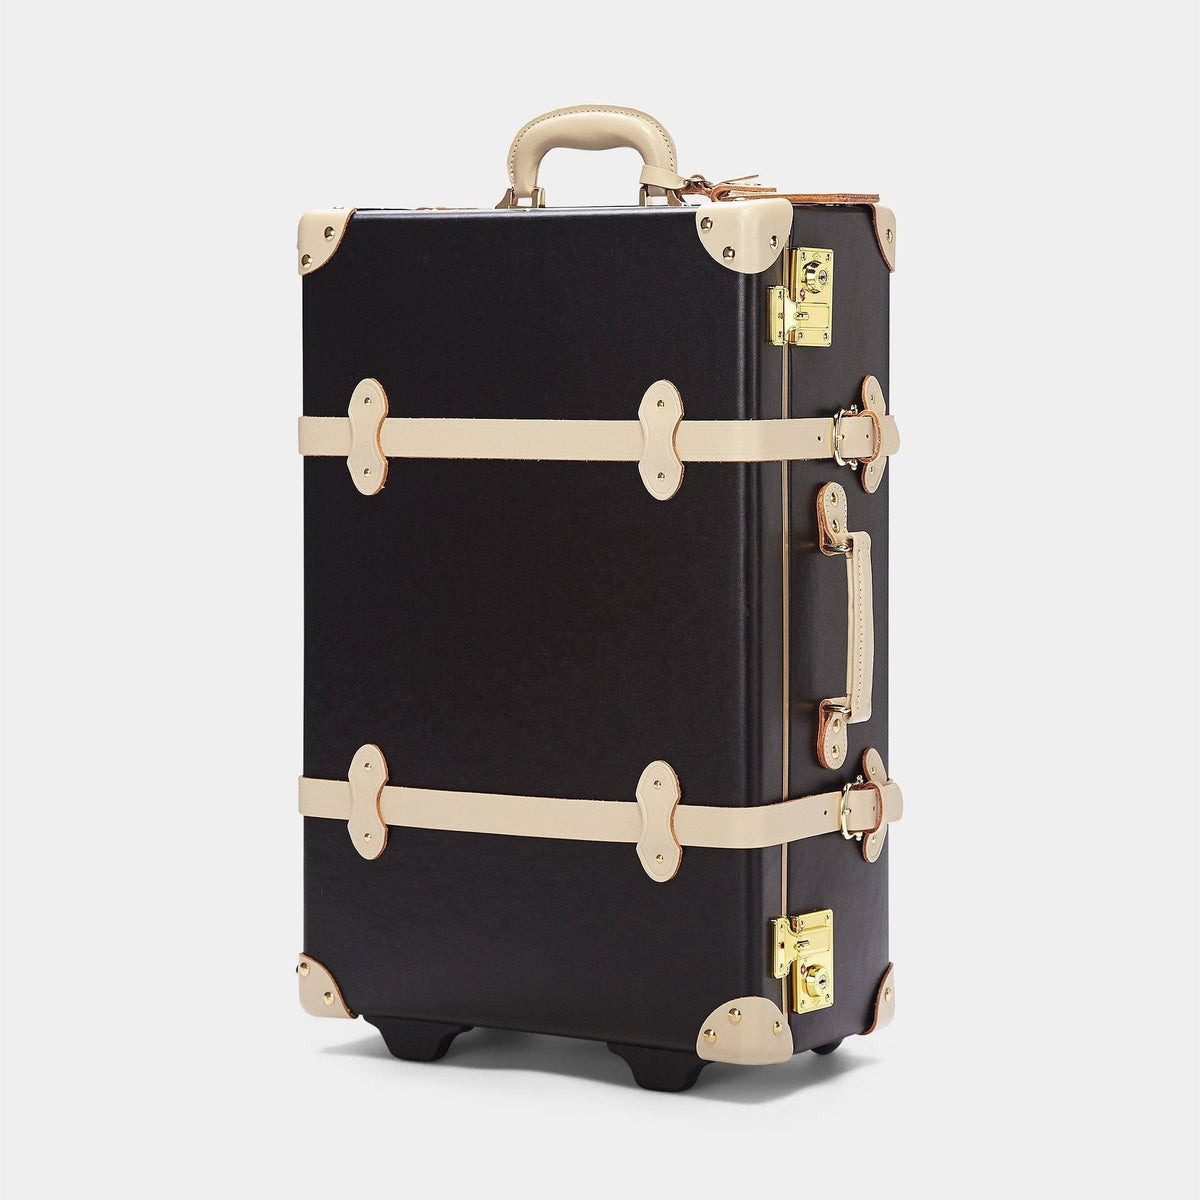 The Starlet Stowaway  Vintage Trunk Suitcase Designer Luggage Sets –  Steamline Luggage